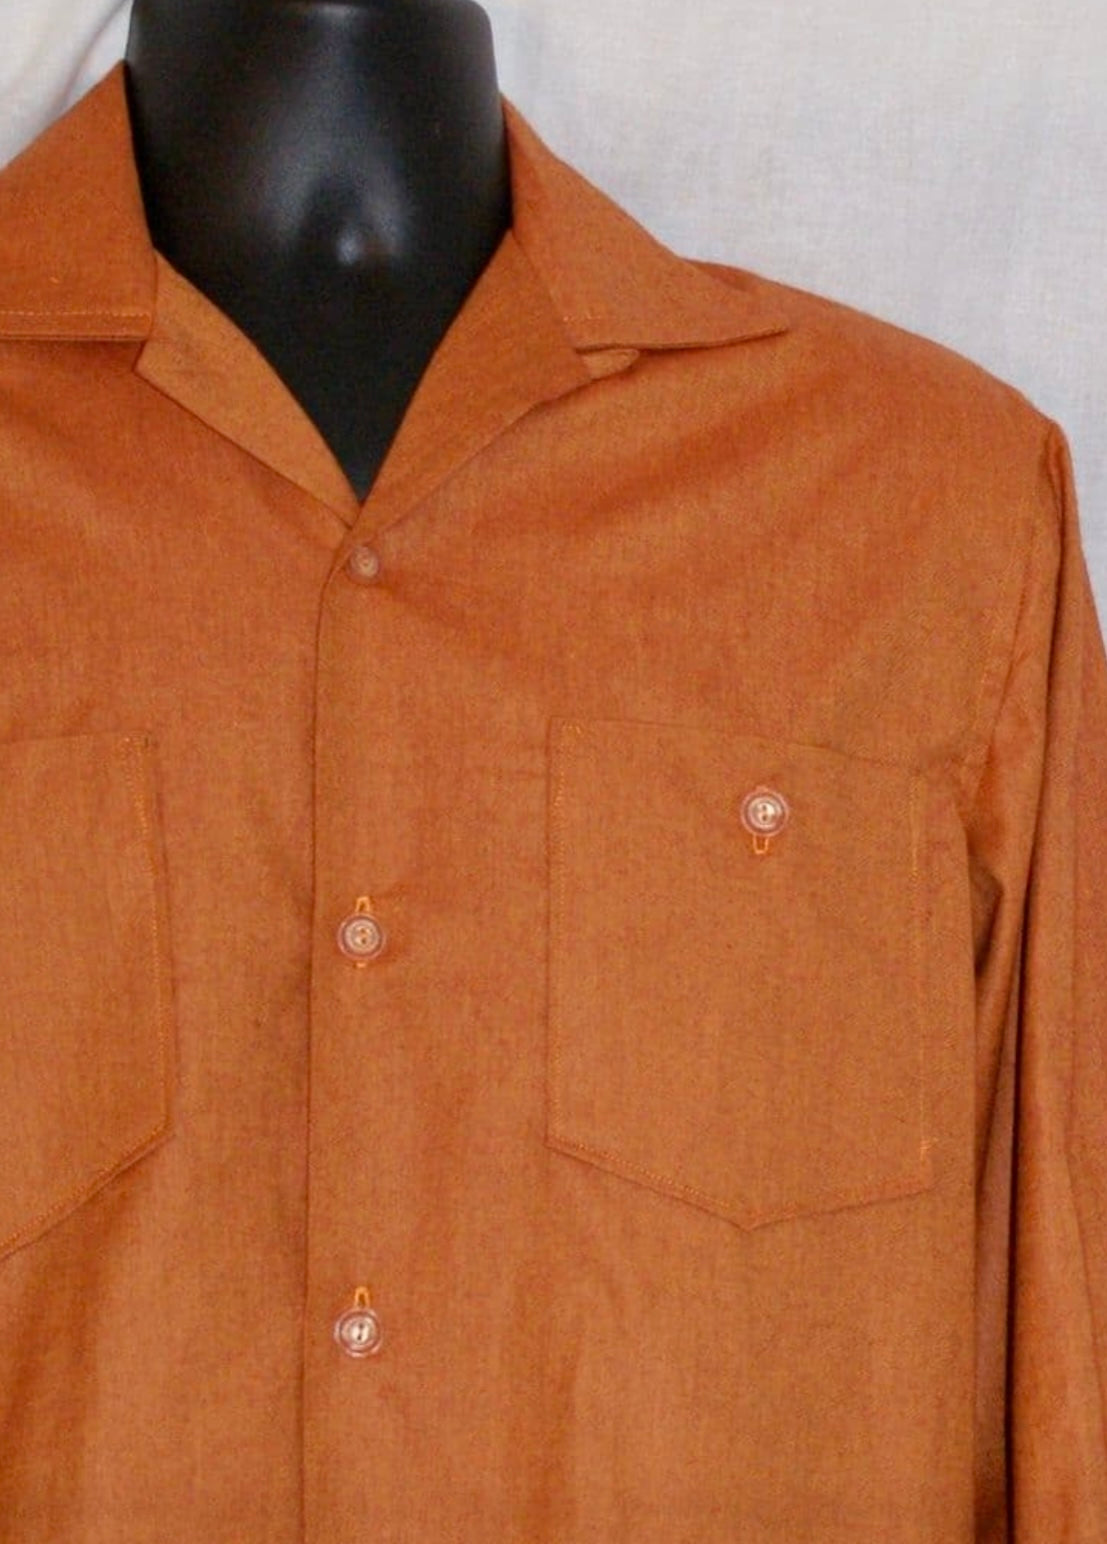 Vintage 1950s mens shirt shot orange S